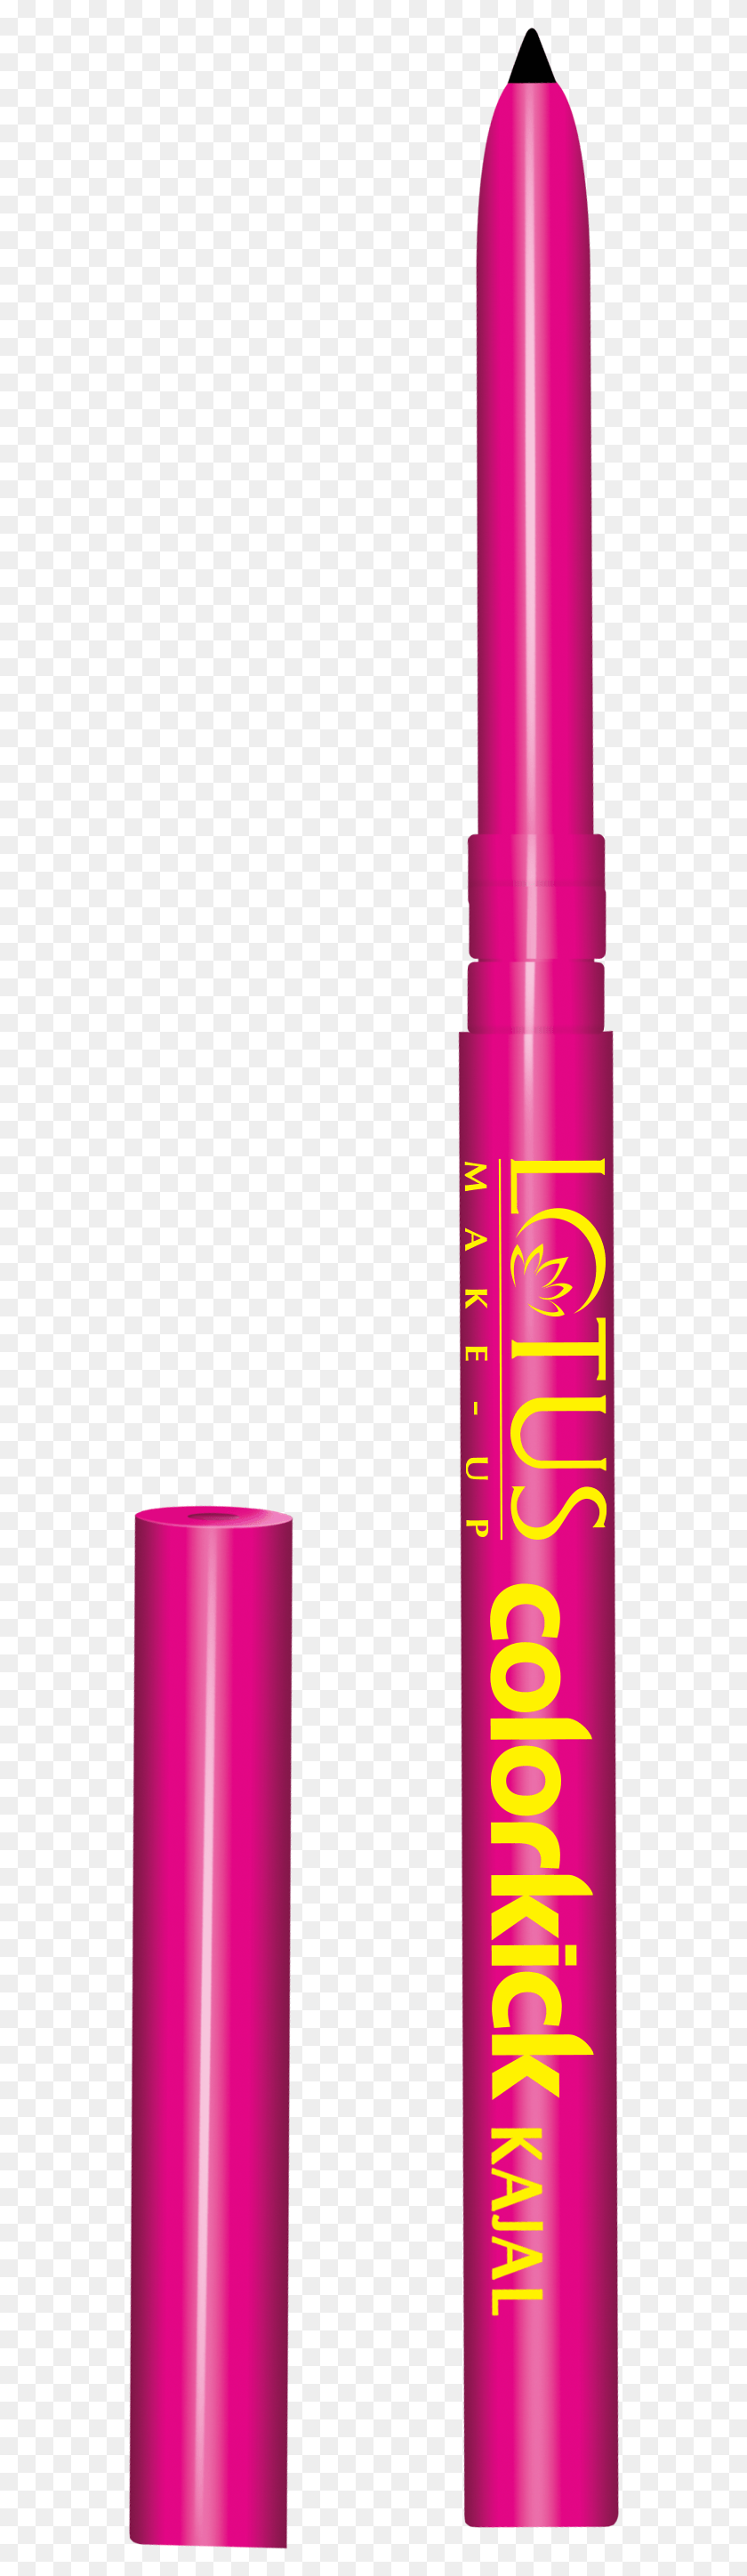 554x2836 Descargar Png Lotus Herbals Kajal Stick Pink Color Eye Kajal, Tin, Lata, Aluminio Hd Png